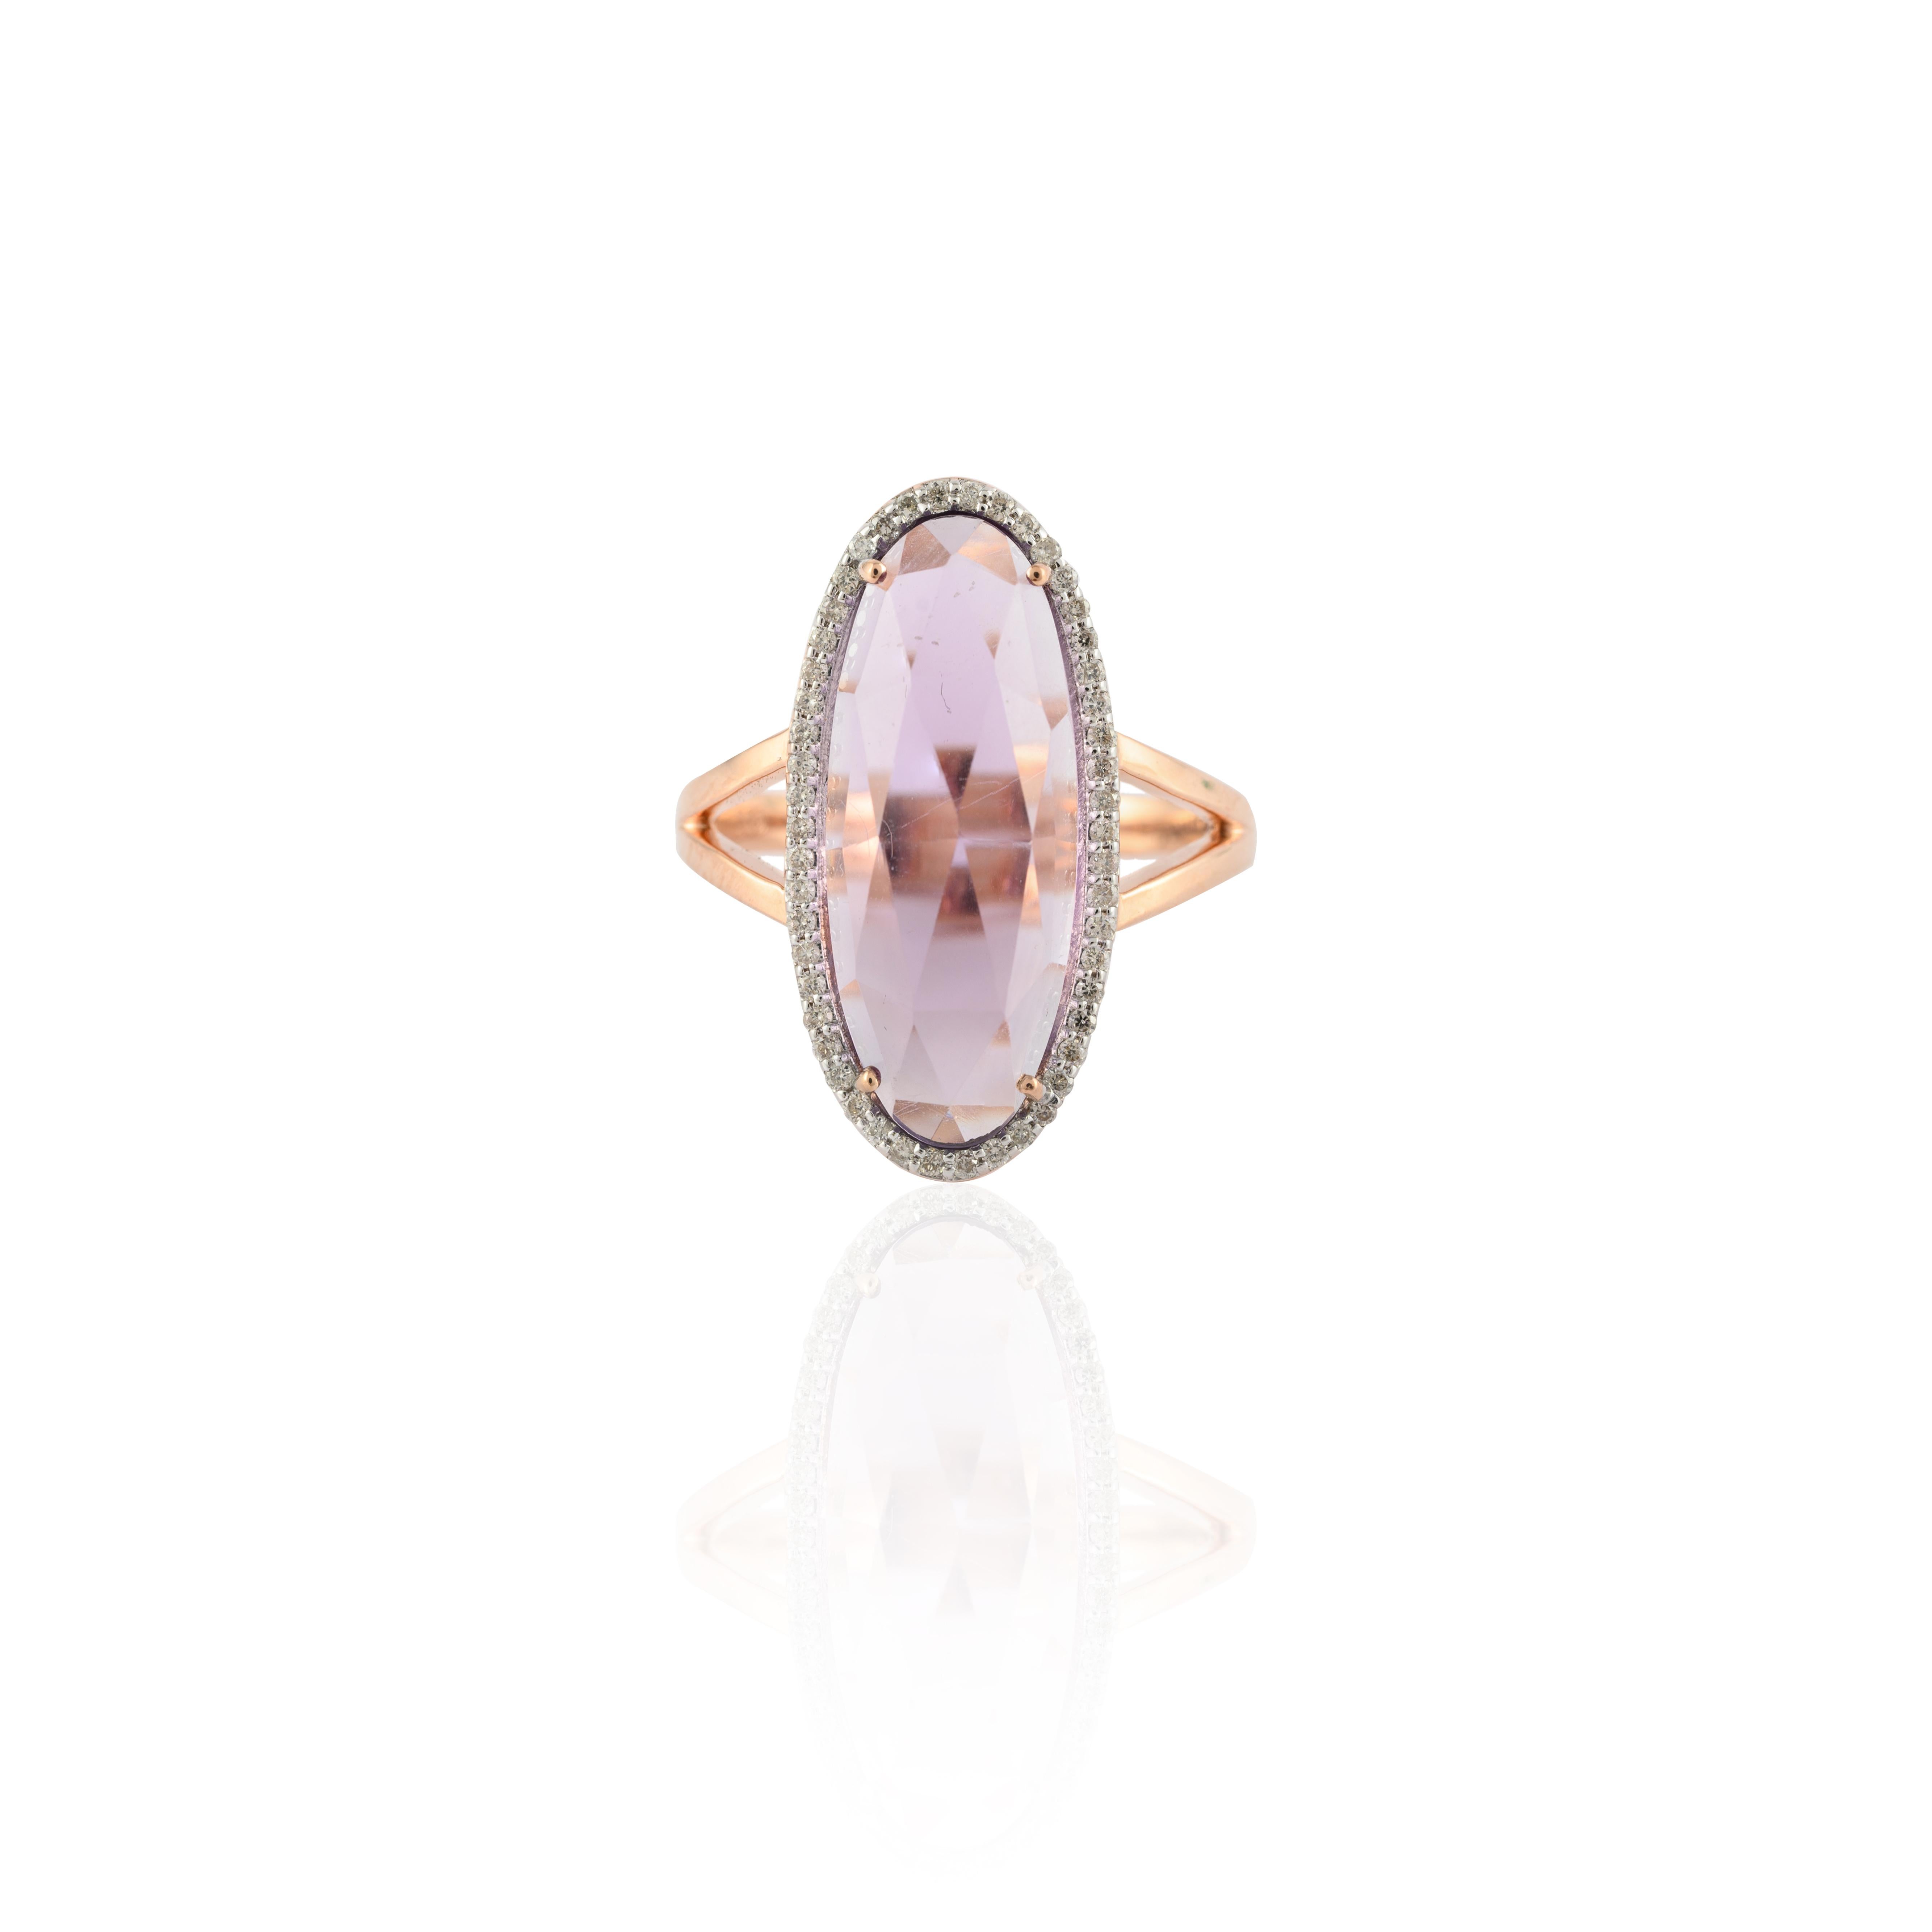 For Sale:  Statement 5.73 Carat Amethyst Diamond Ring 14 Karat Solid Rose Gold 4